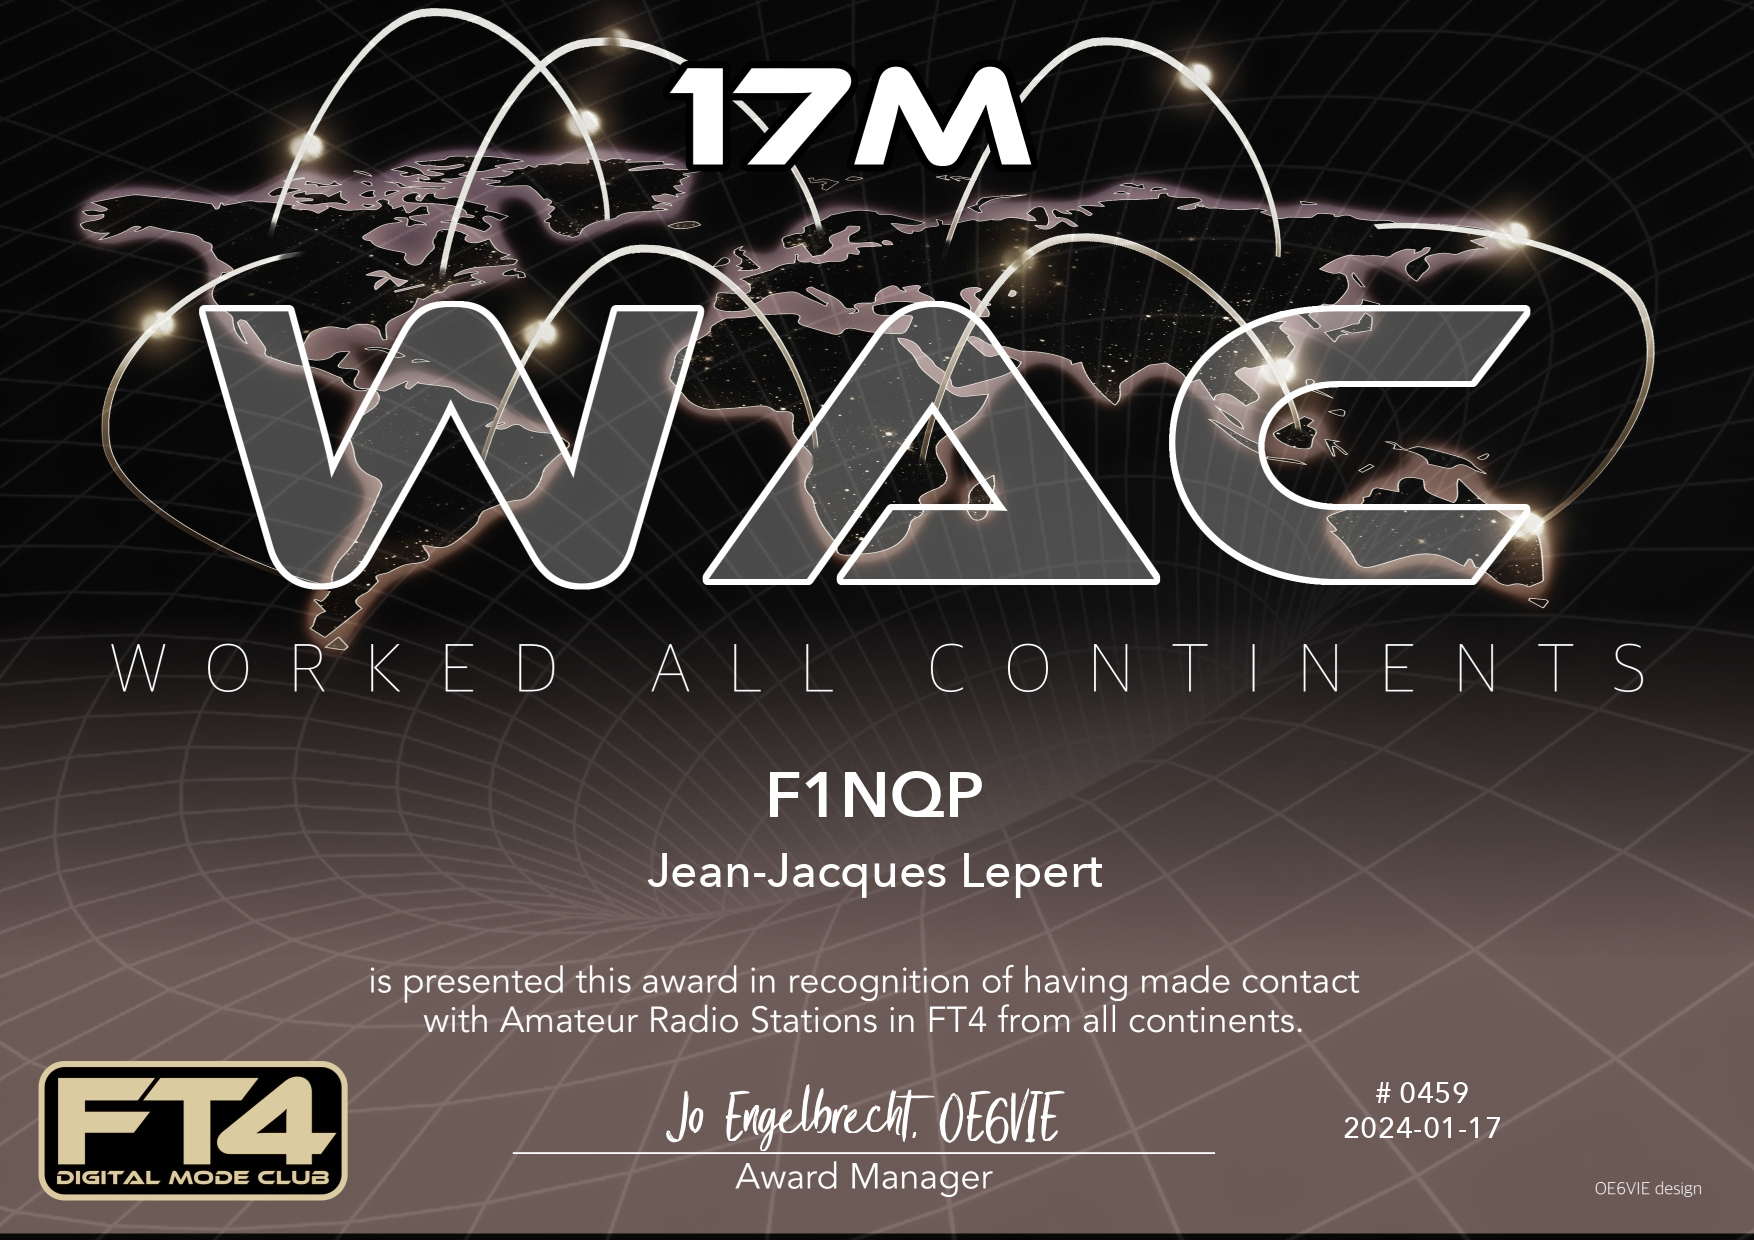 F1NQP-WAC-17M_FT4DMC.jpg